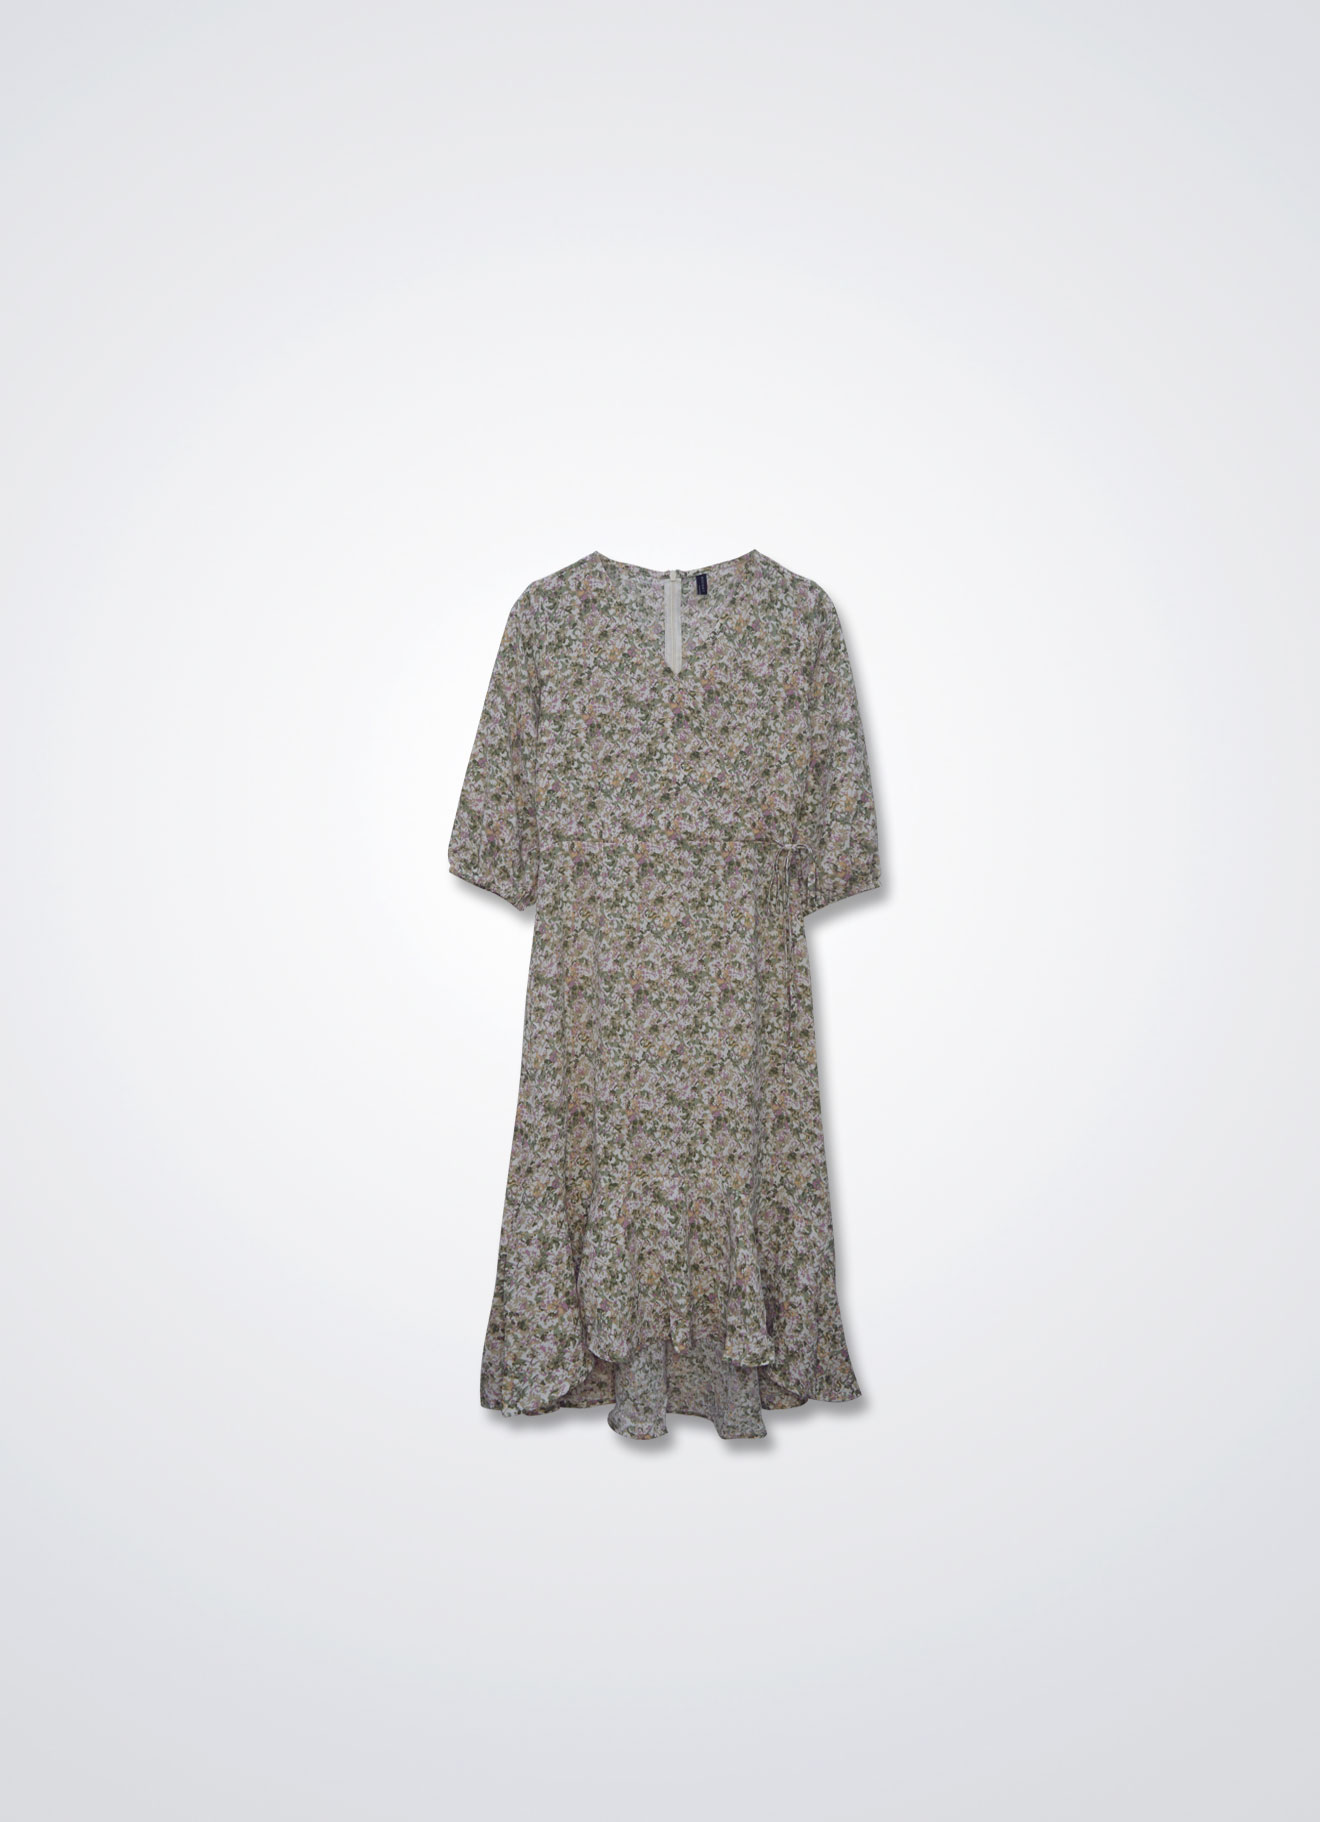 Mistletoe by Floral Printed Dress